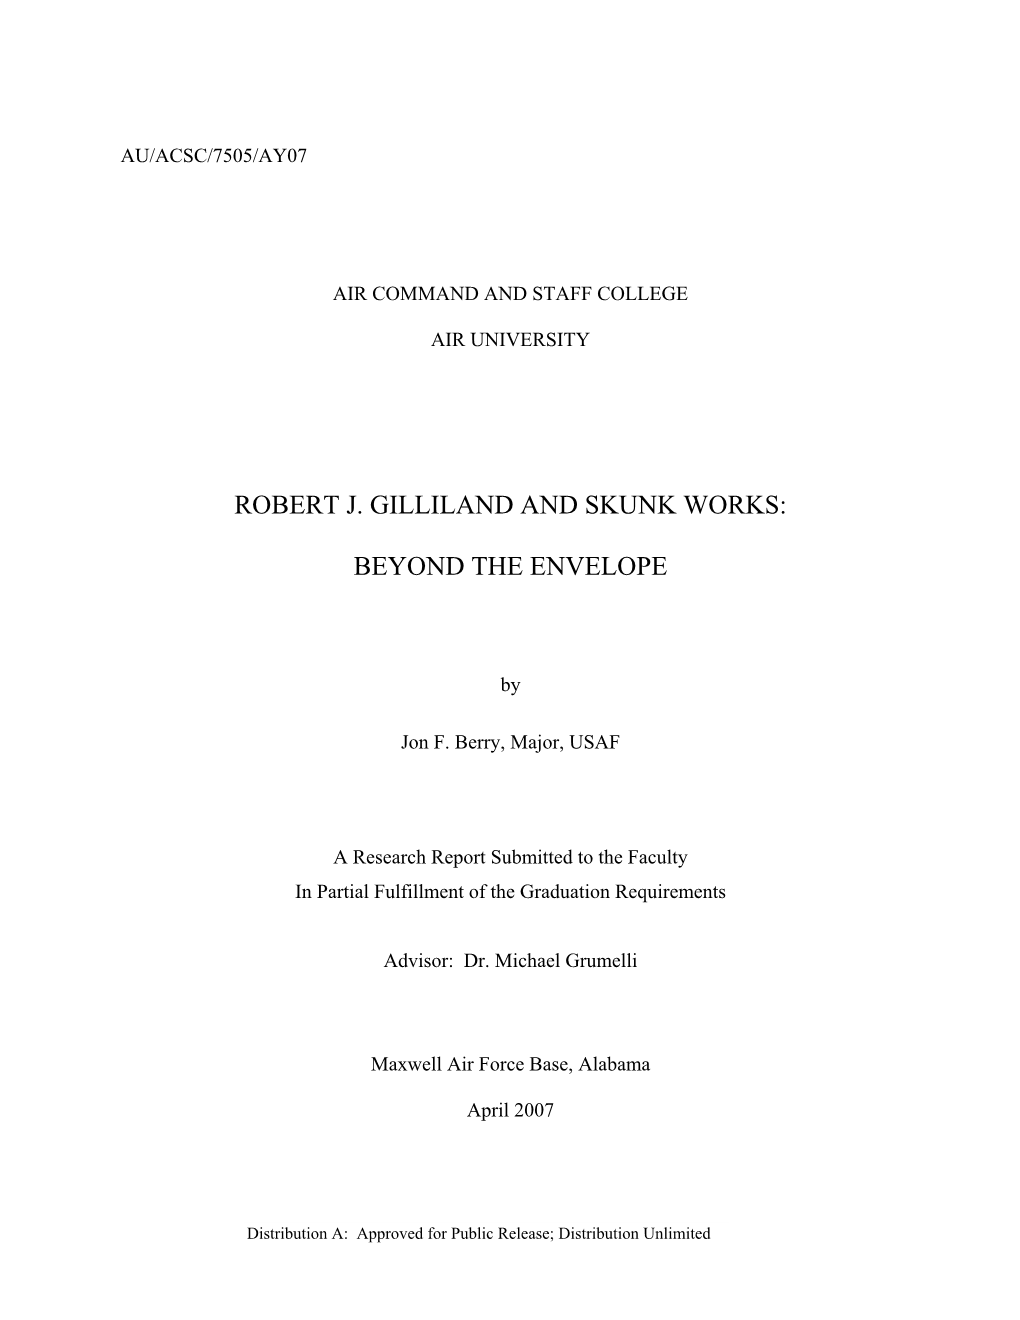 Robert J. Gilliland and Skunk Works